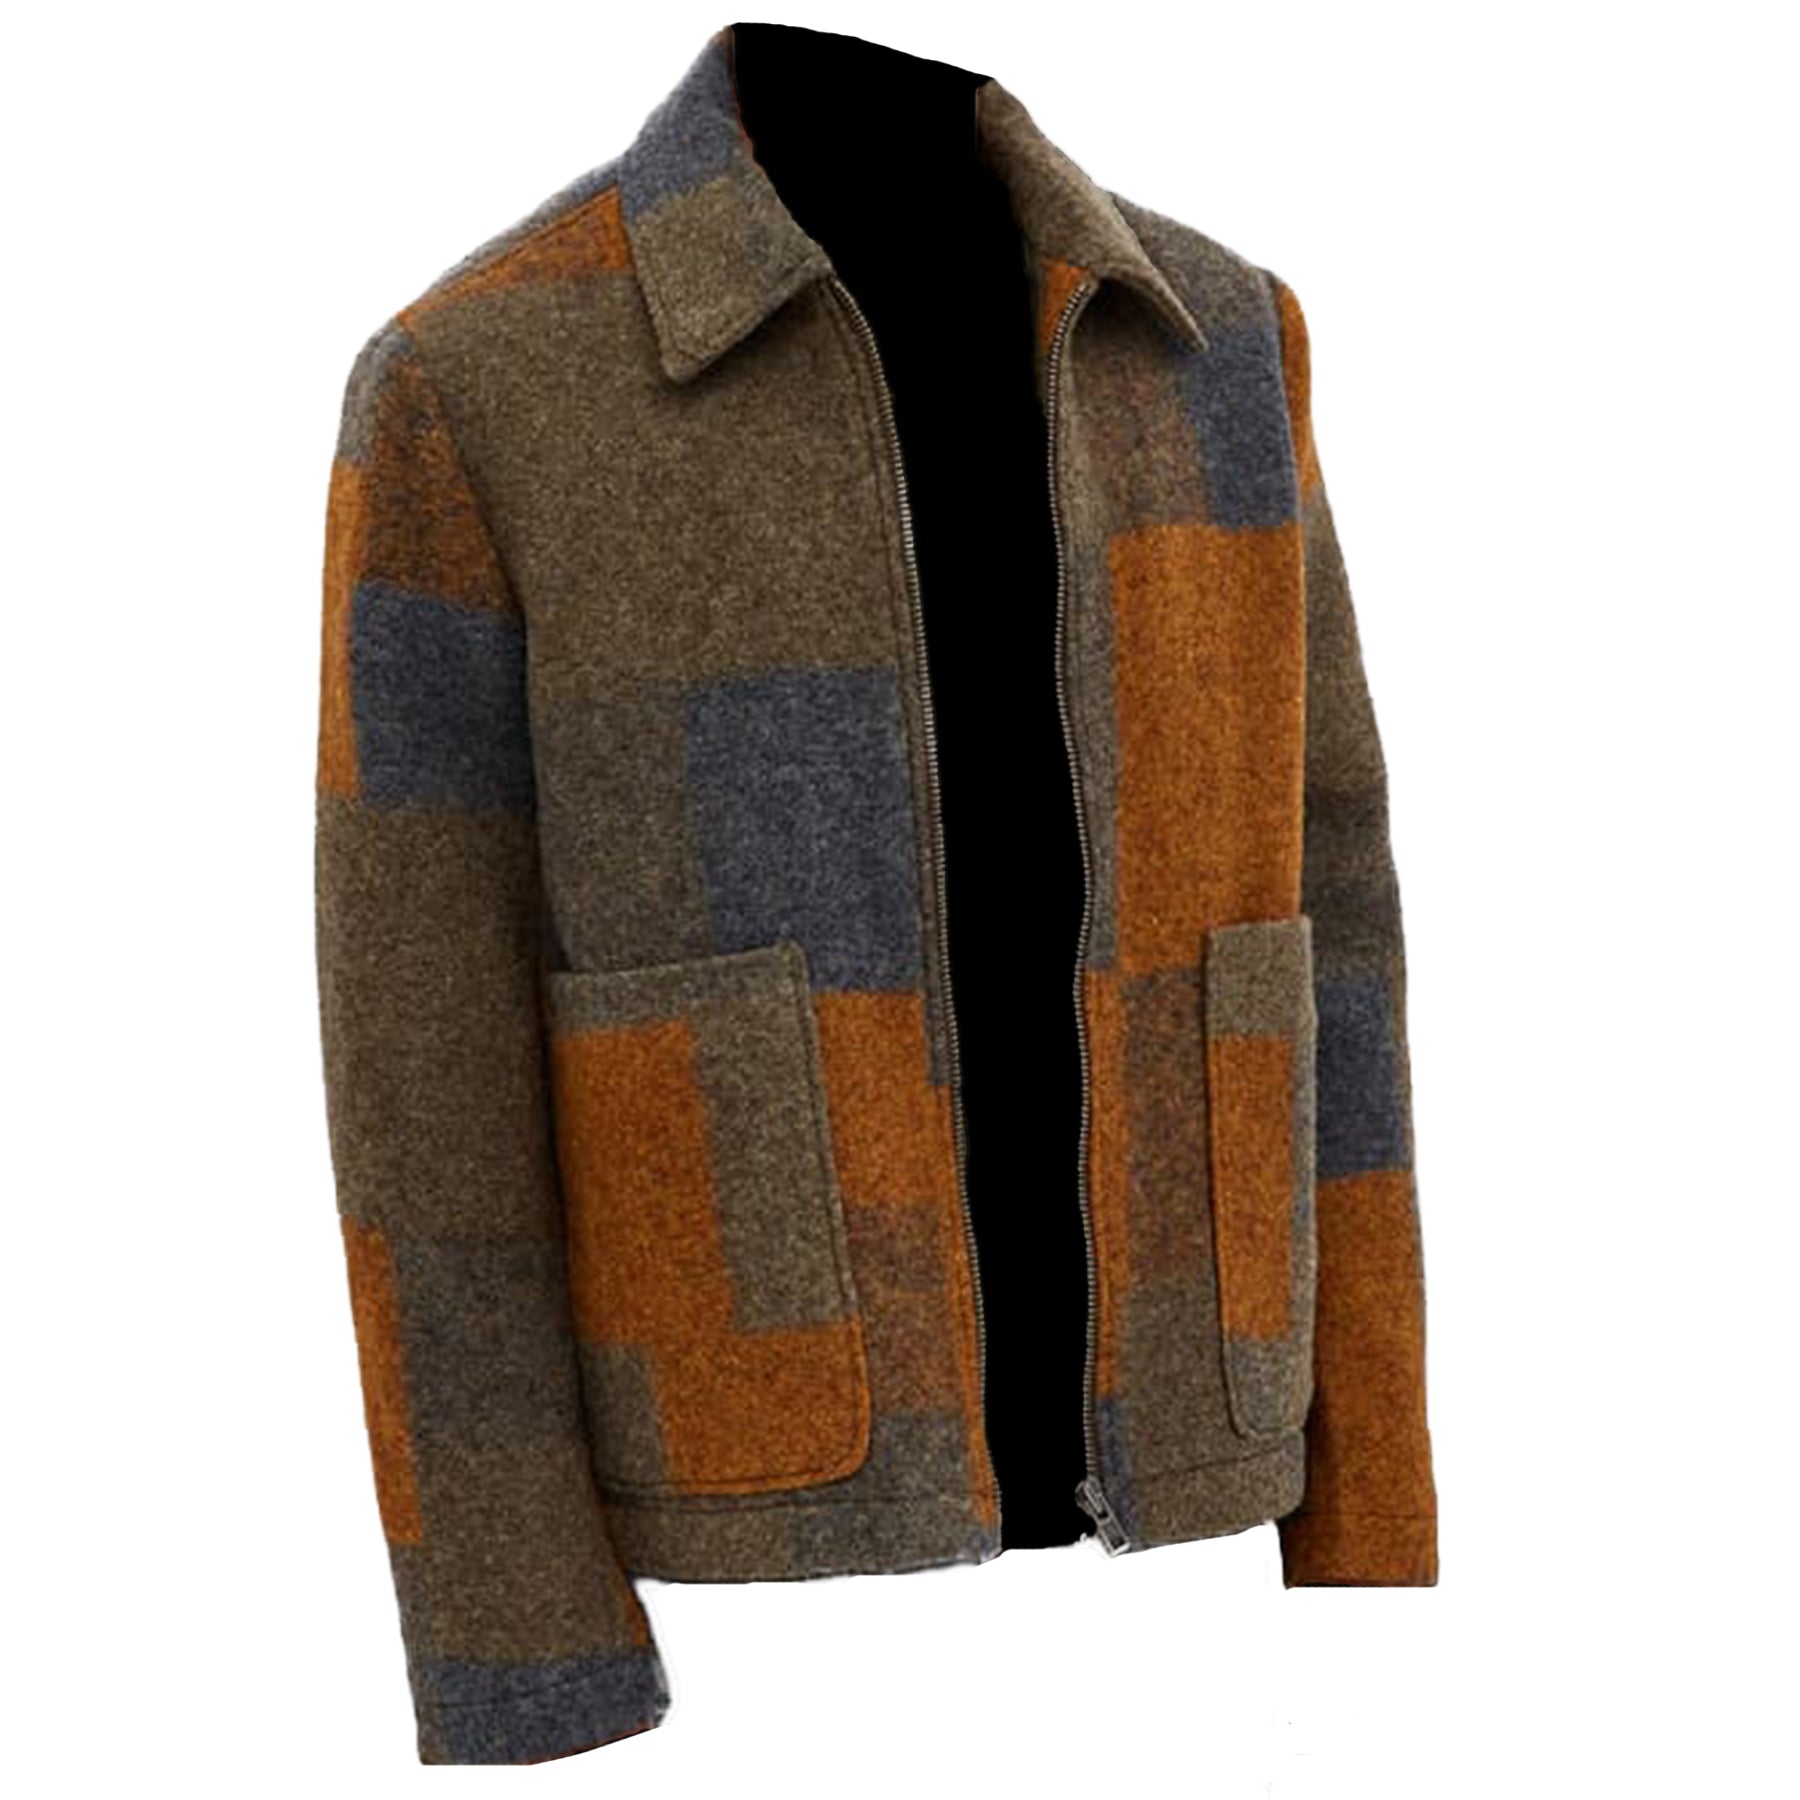 The Bear Carmy Wool Jacket